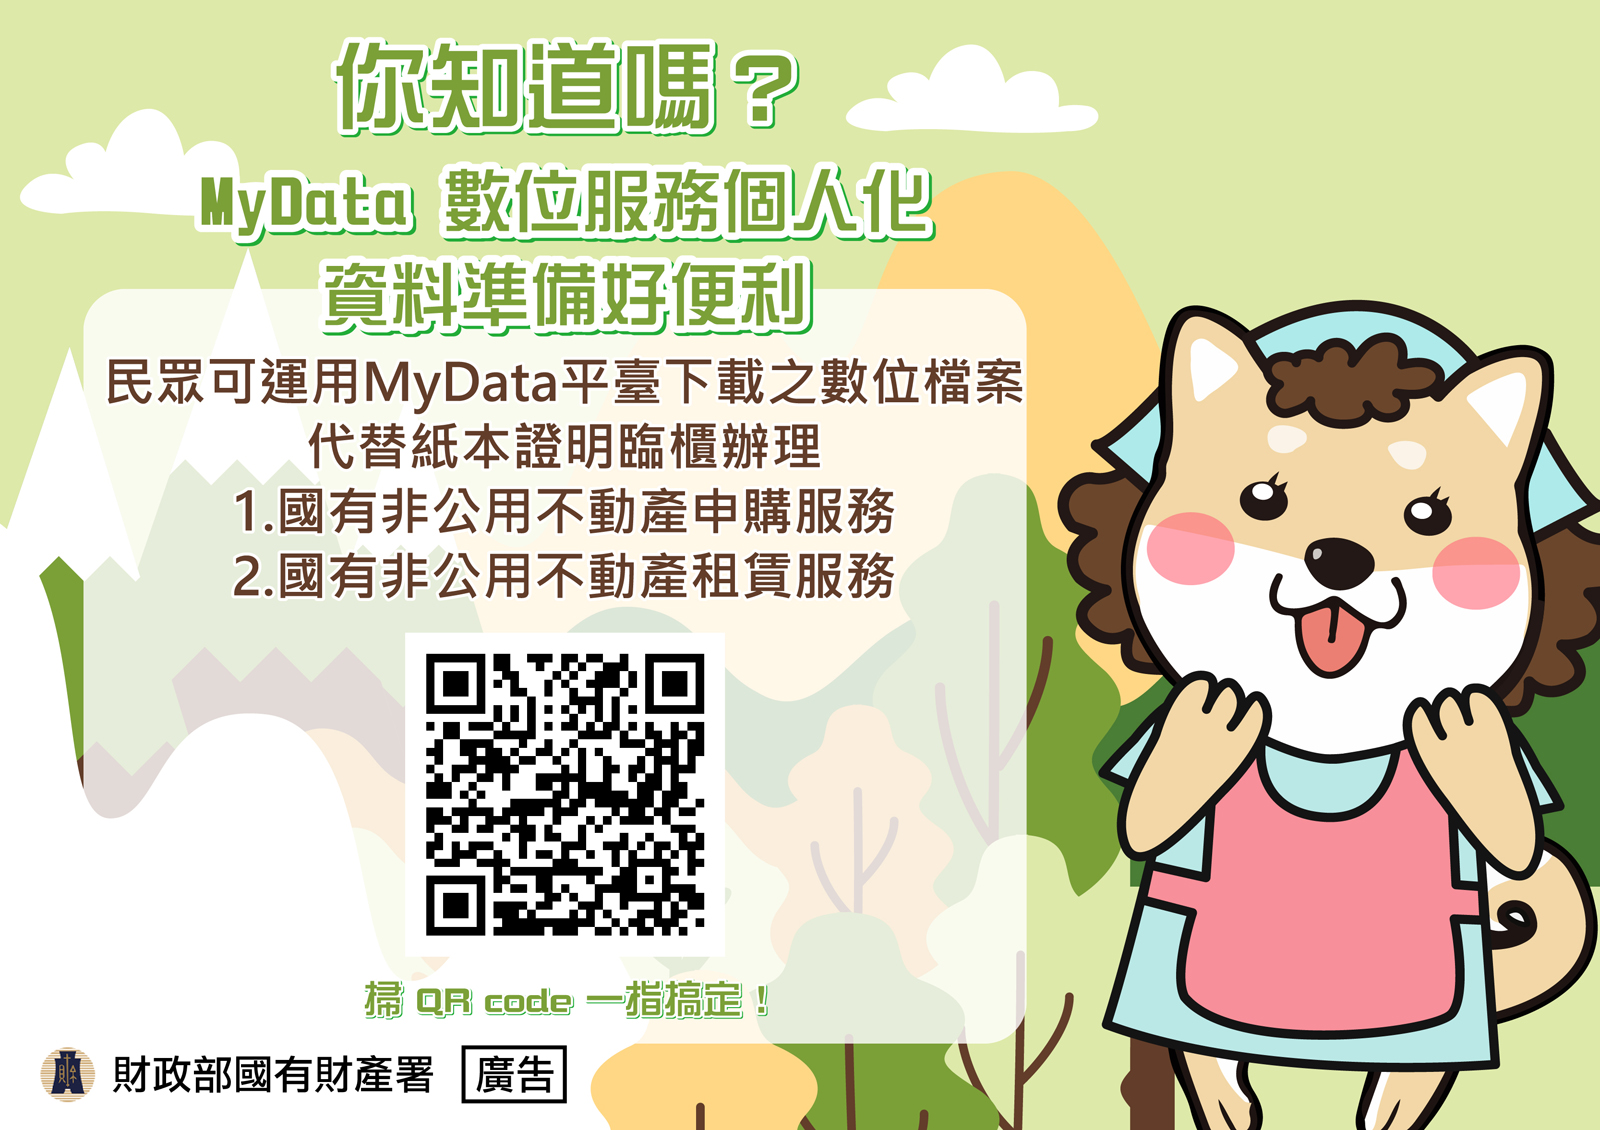 MyData 數位服務個人化<br>資料準備好便利